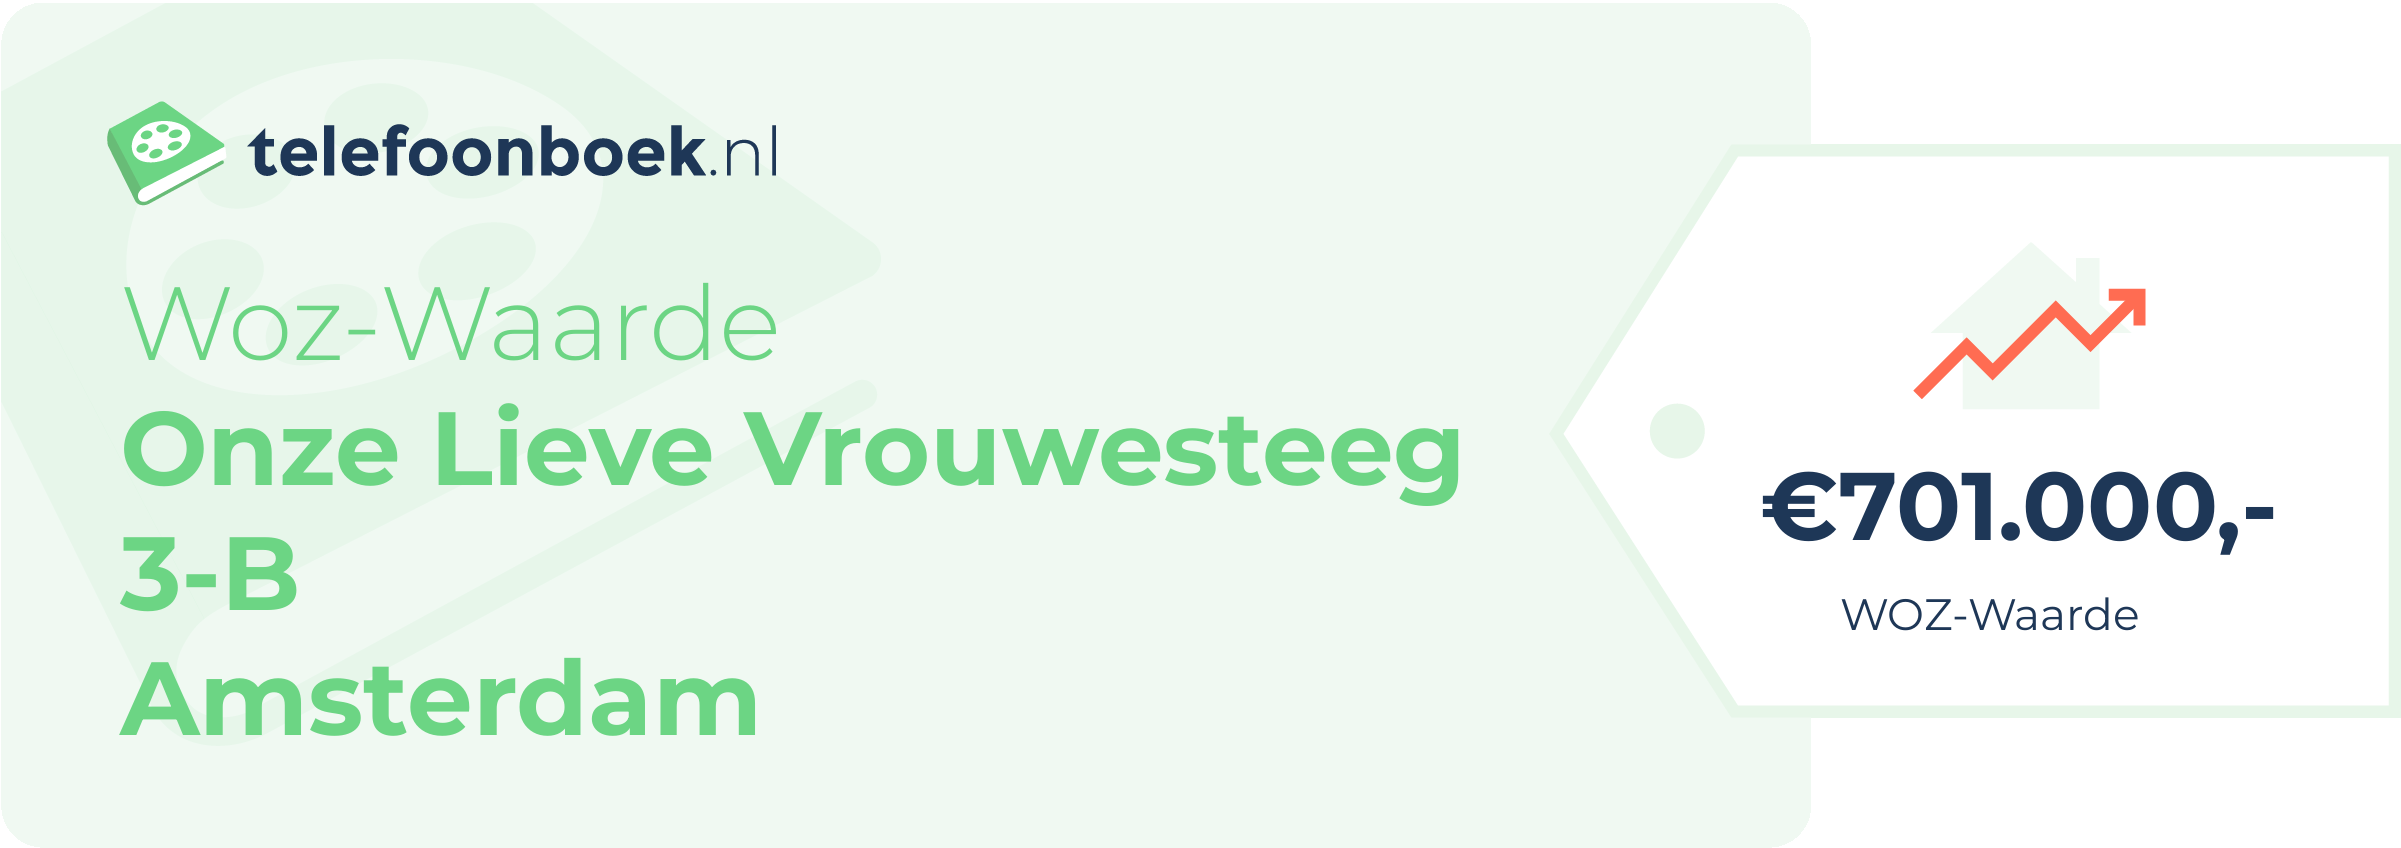 WOZ-waarde Onze Lieve Vrouwesteeg 3-B Amsterdam